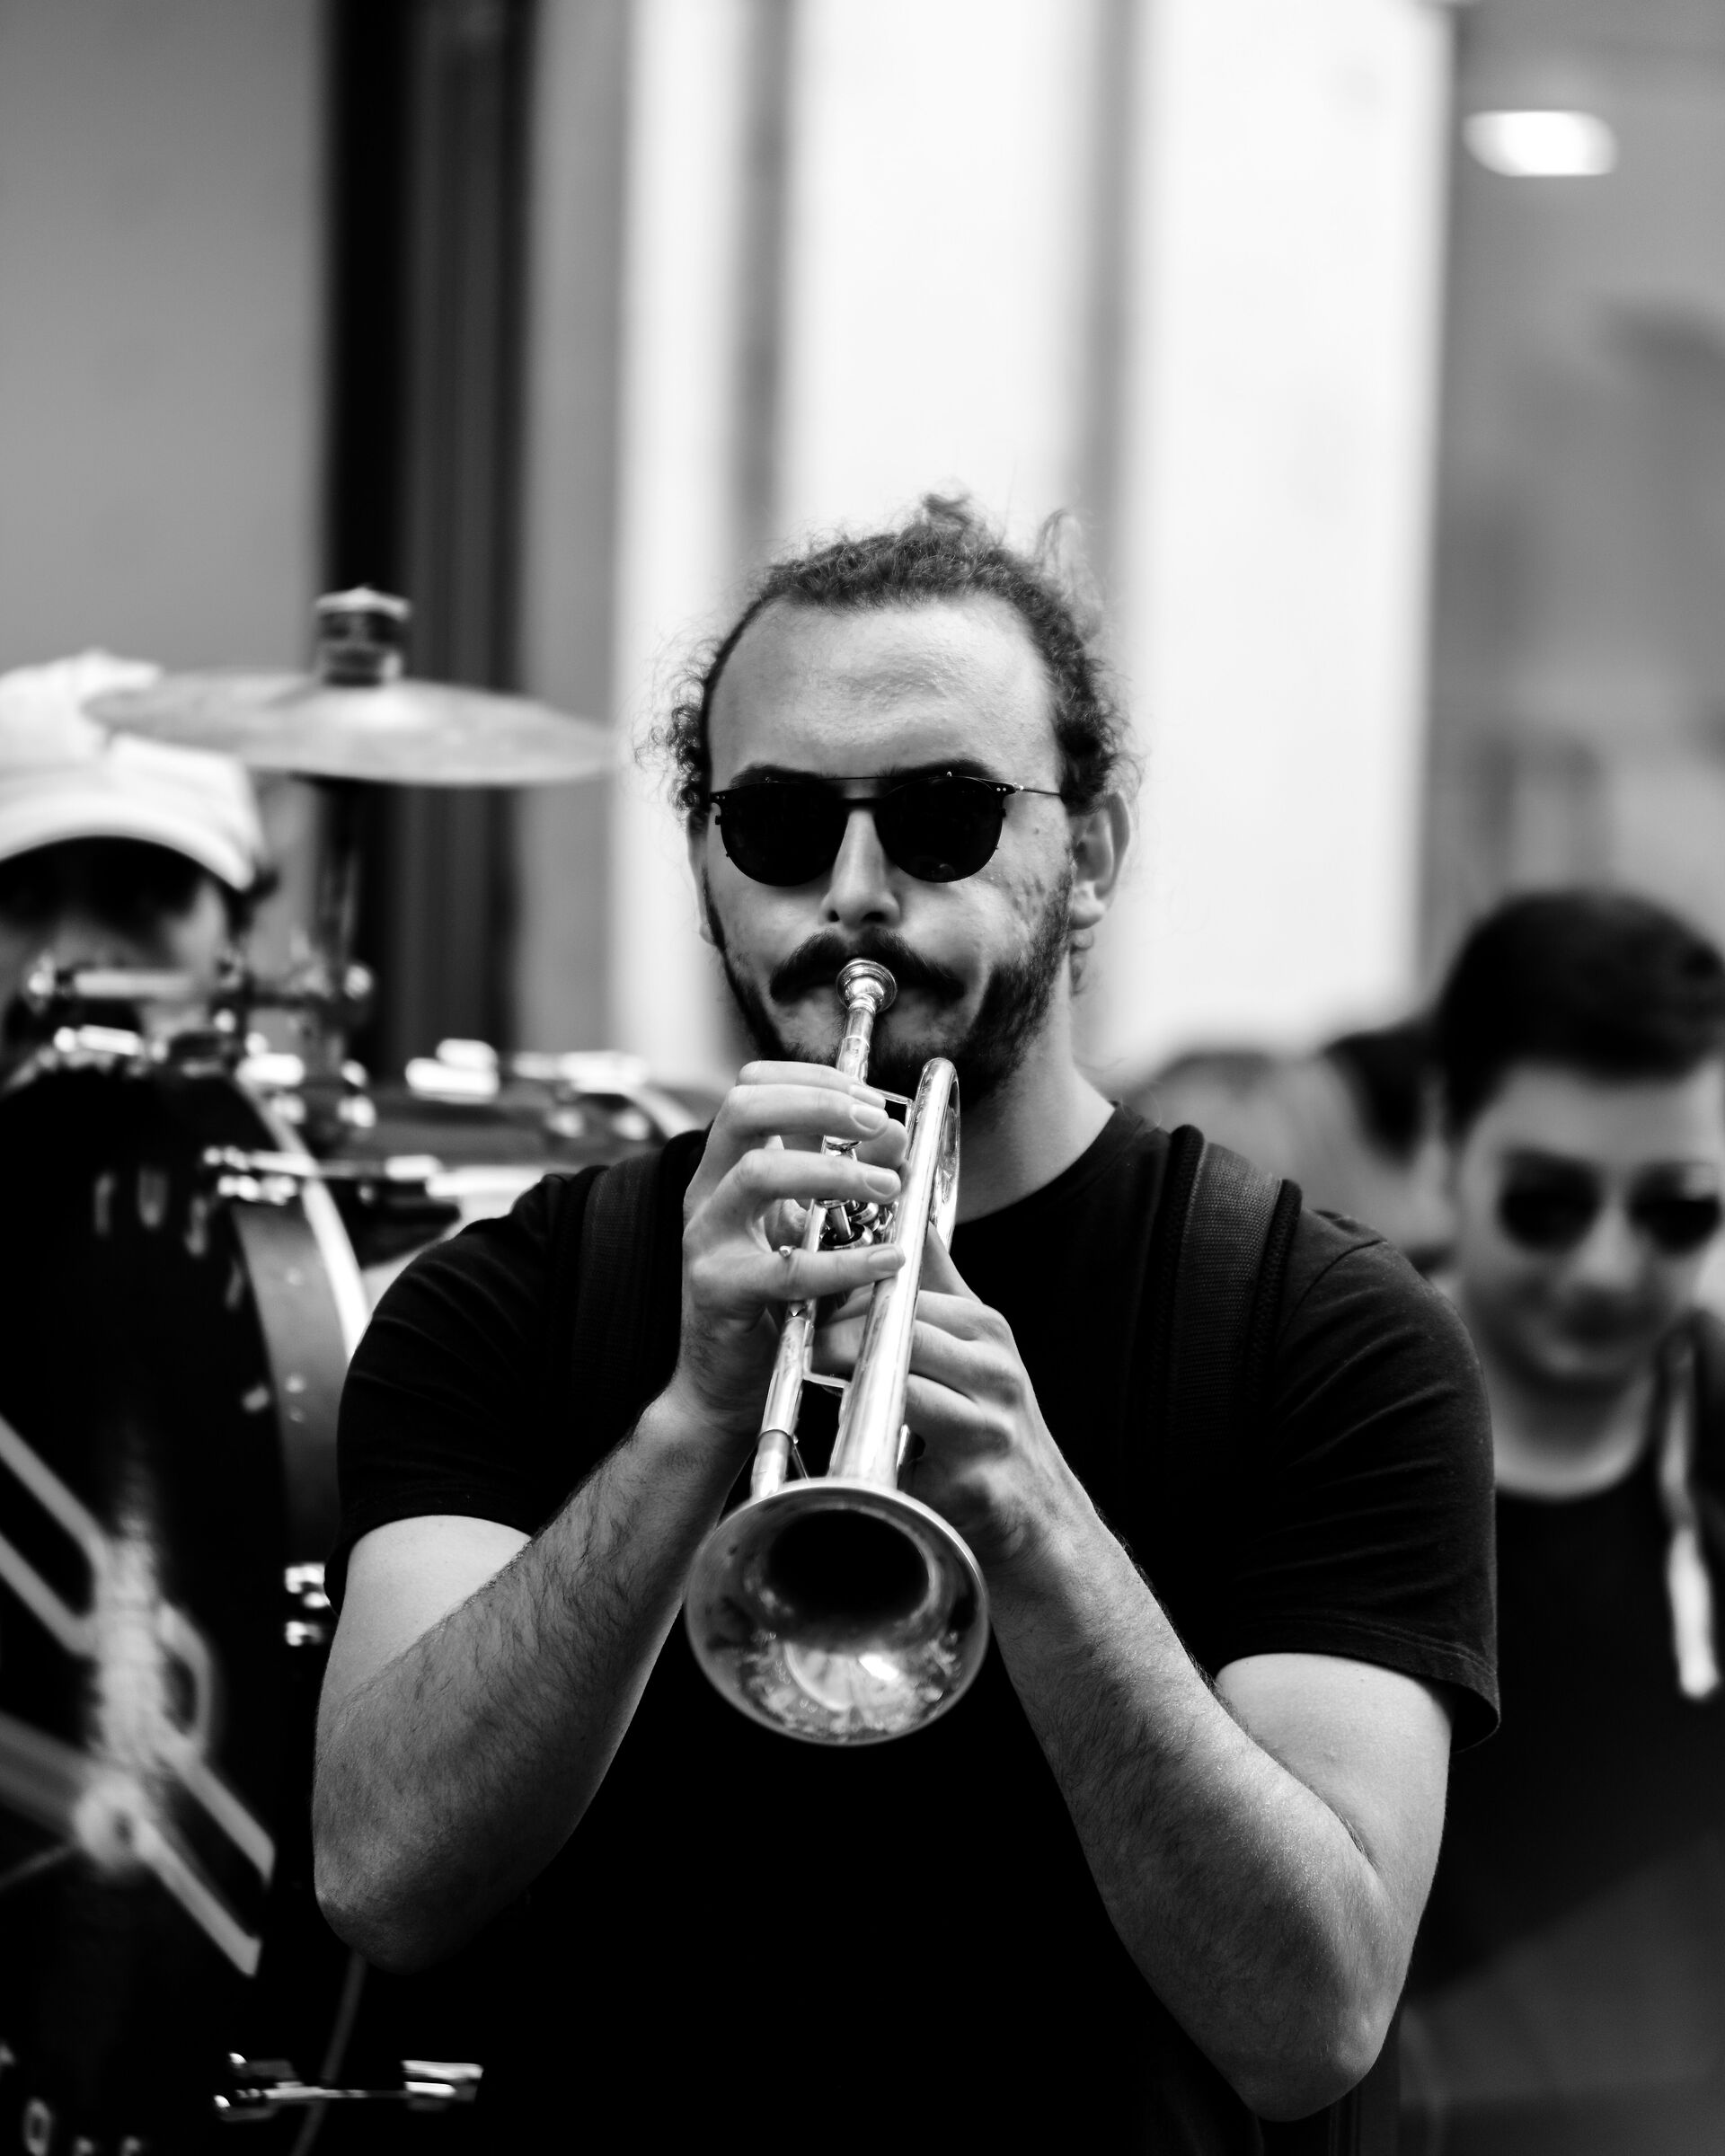 Street musicians at the busker festival in Salò...